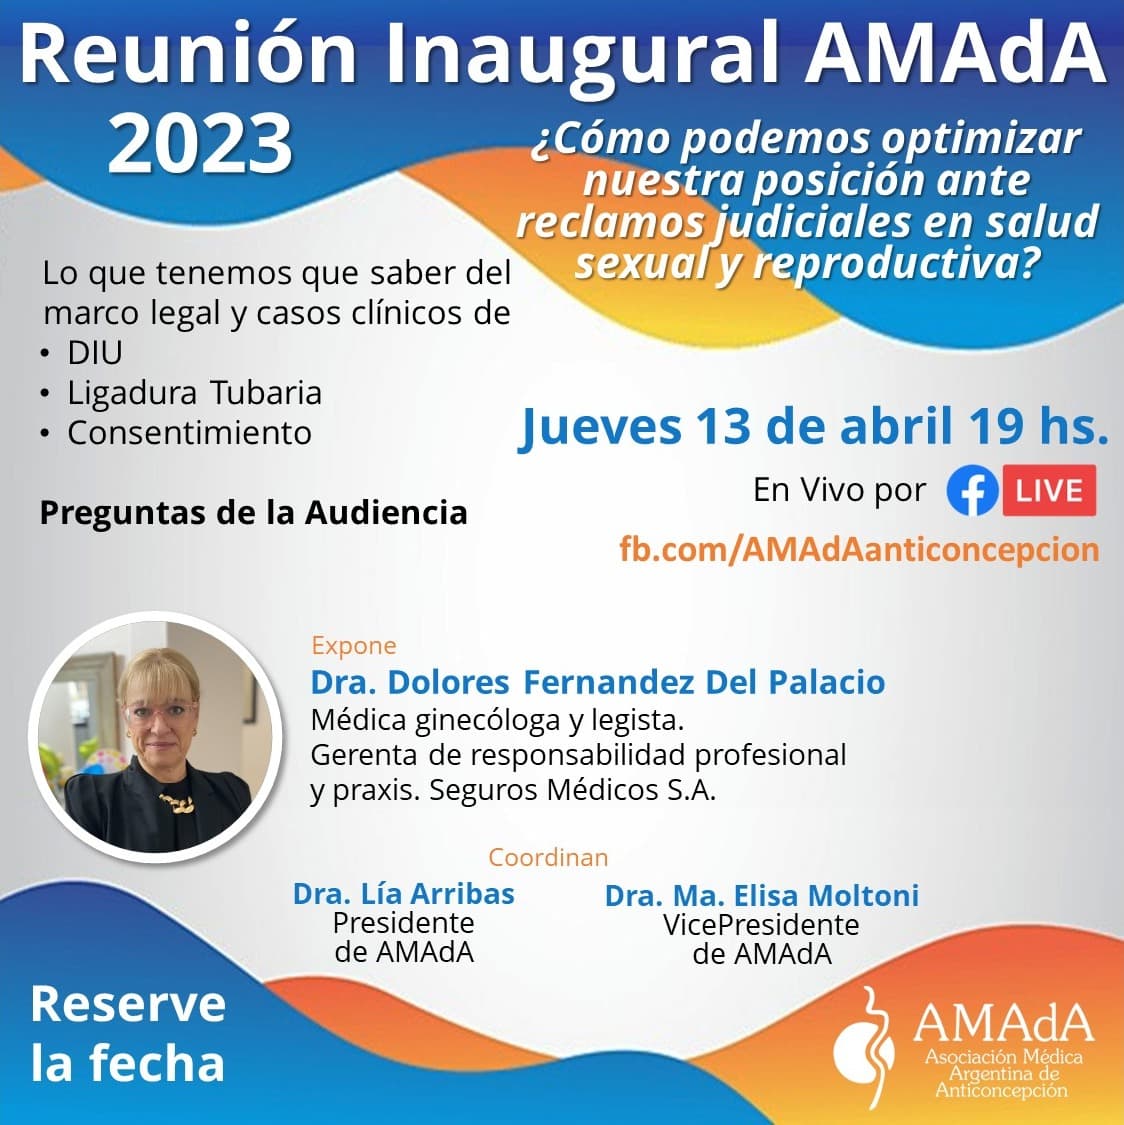 Inaugural AMAdA 2023